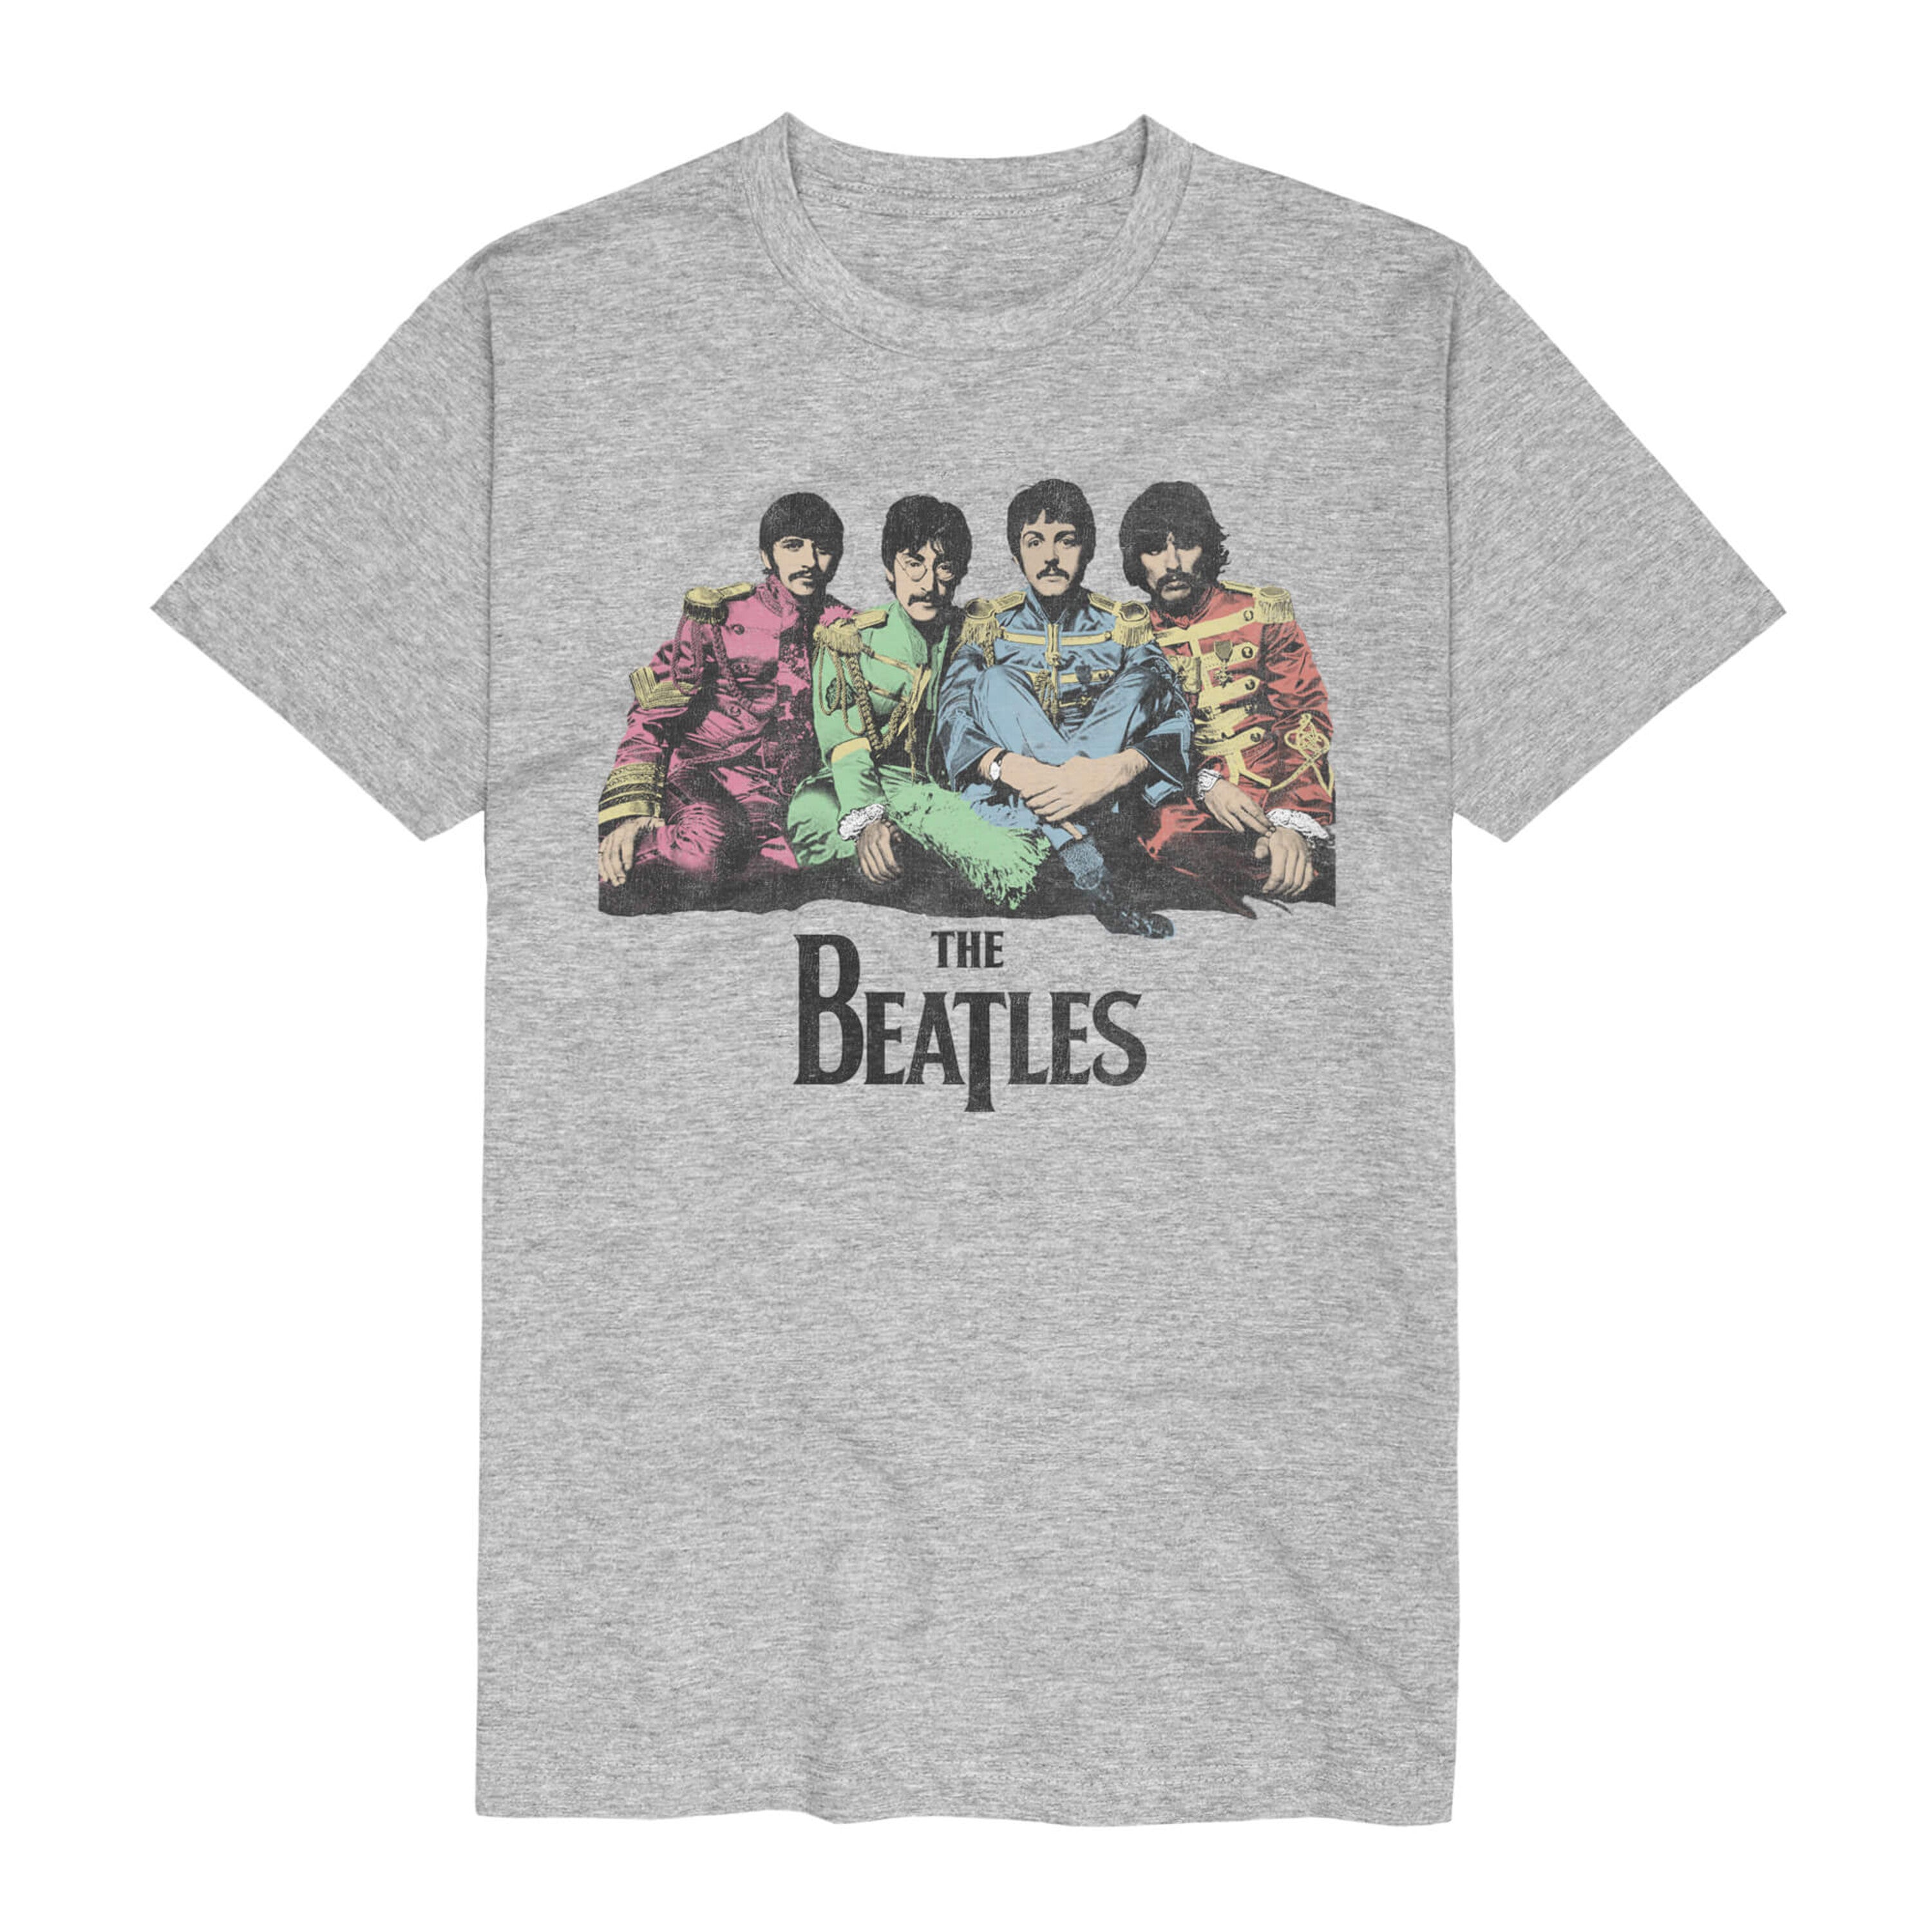 https://images.bravado.de/prod/product-assets/product-asset-data/beatles-the/the-beatles-domestic/products/132423/web/247195/image-thumb__247195__3000x3000_original/The-Beatles-Sgt-Pepper-Band-T-Shirt-grau-meliert-132423-247195.jpg